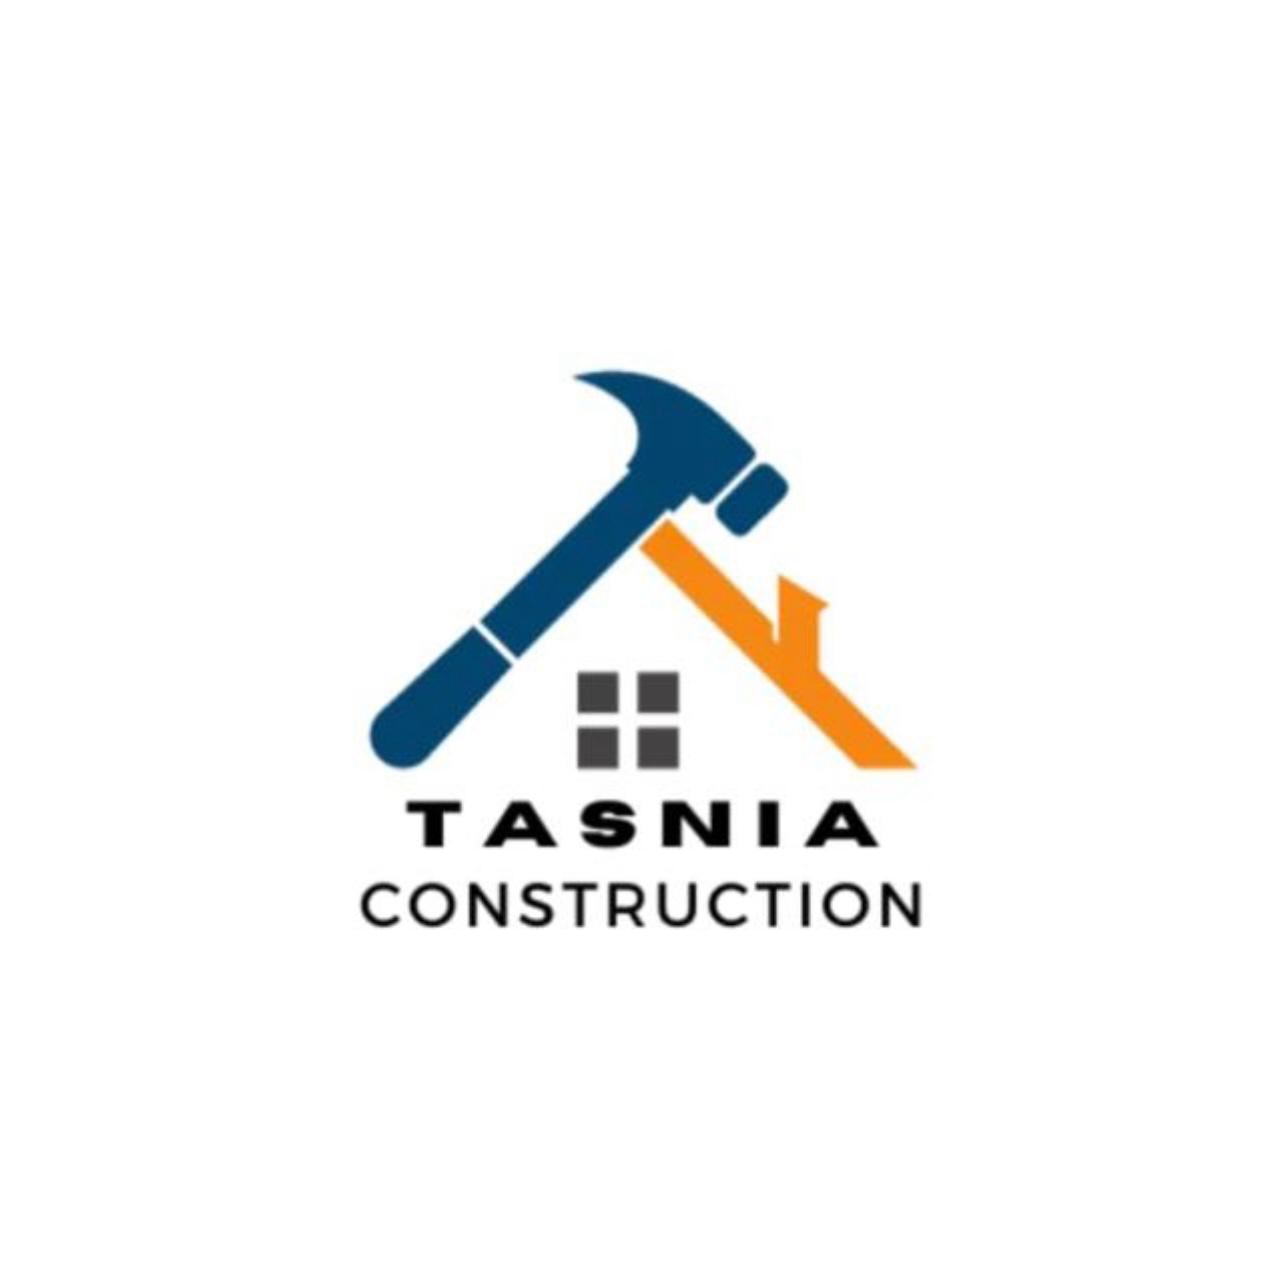 Tasnia Construction Pte. Ltd. company logo